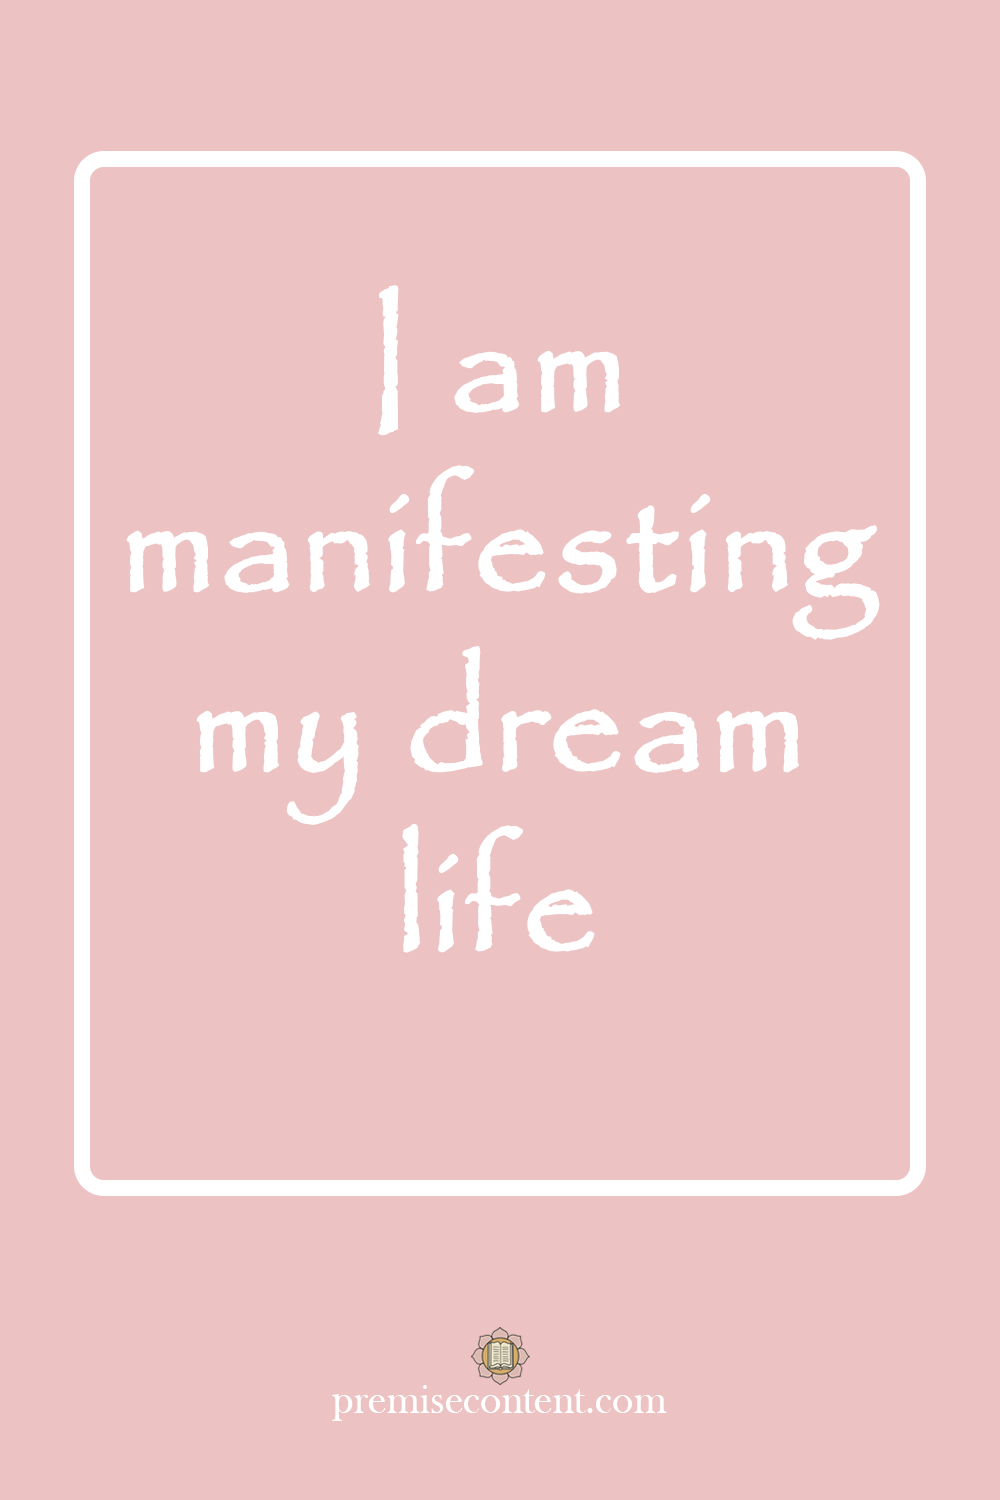 I am manifesting my dream life - Positive Affirmation